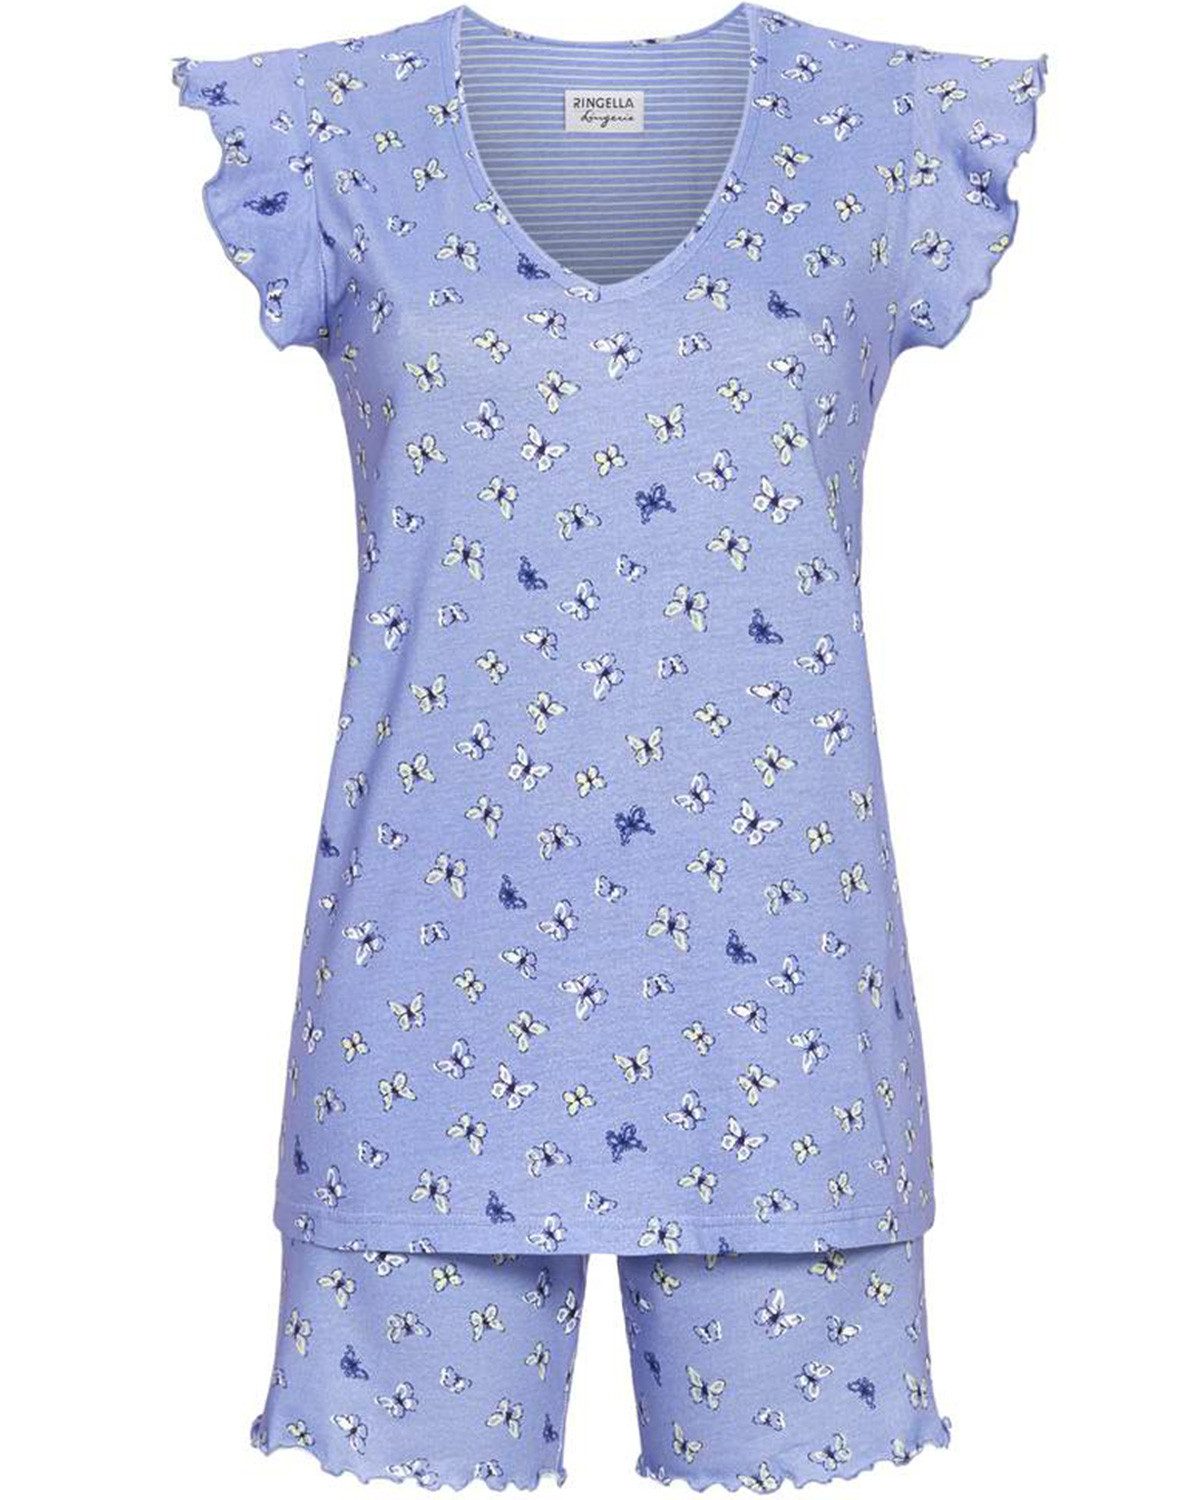 Ringella Pyjama Damen Kurzarm 'Butterflys' 4261318, Milky Blue